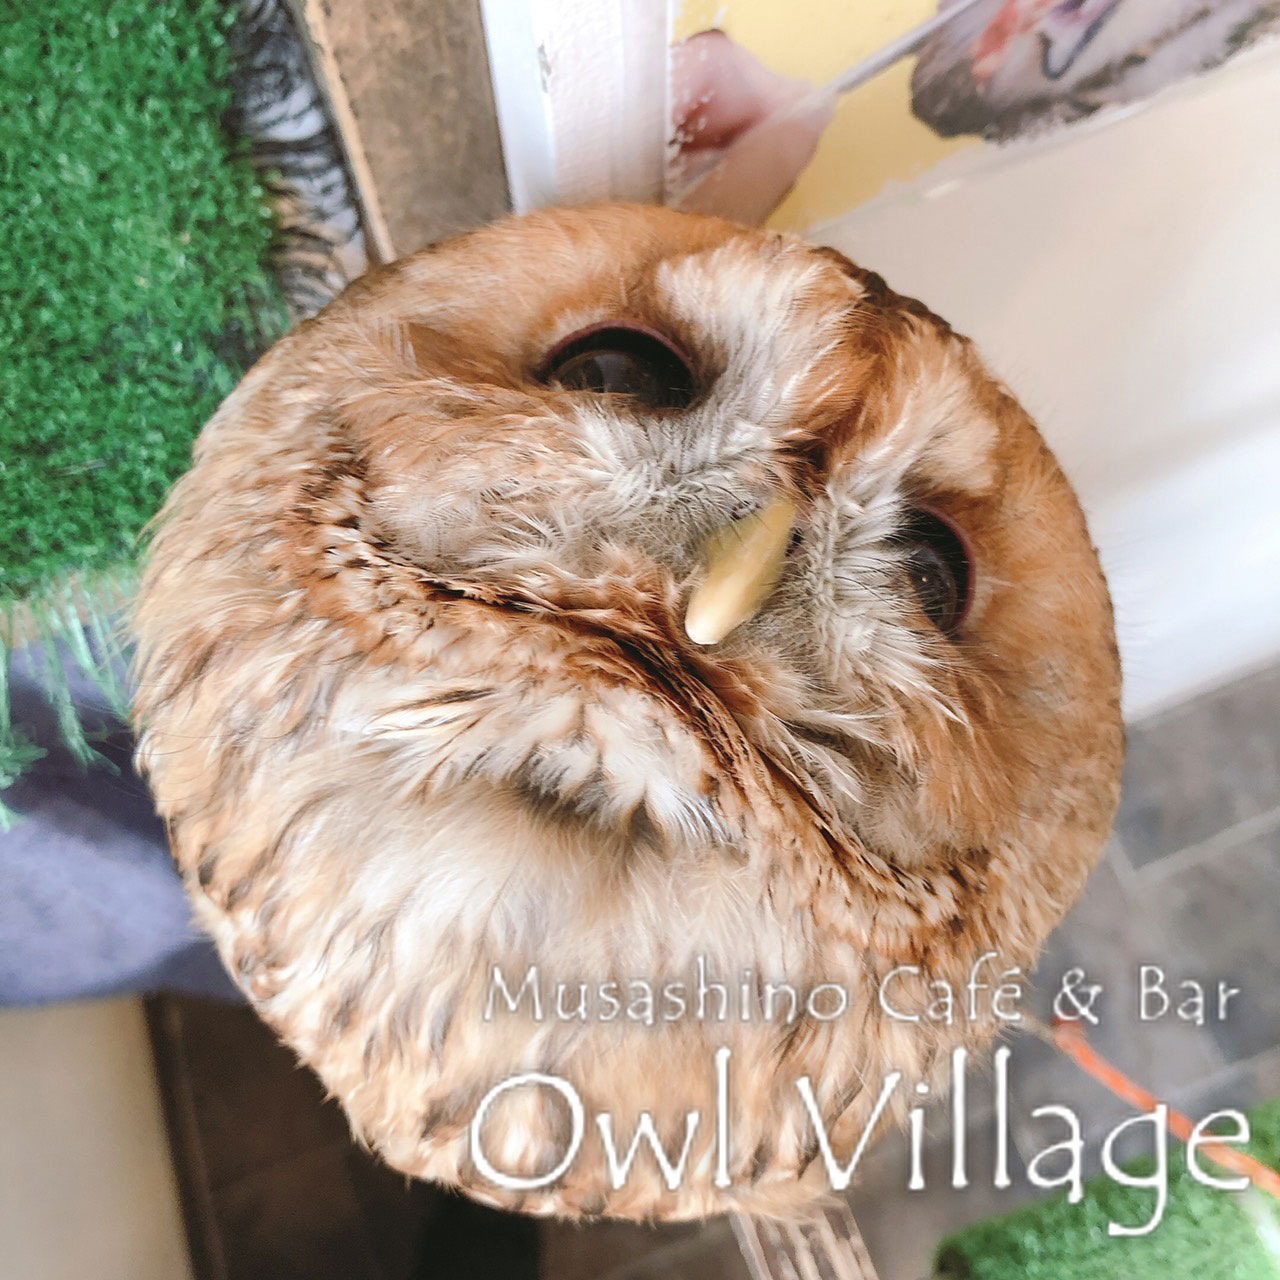 owl cafe harajuku down load free photo 0324 Tawny Owl